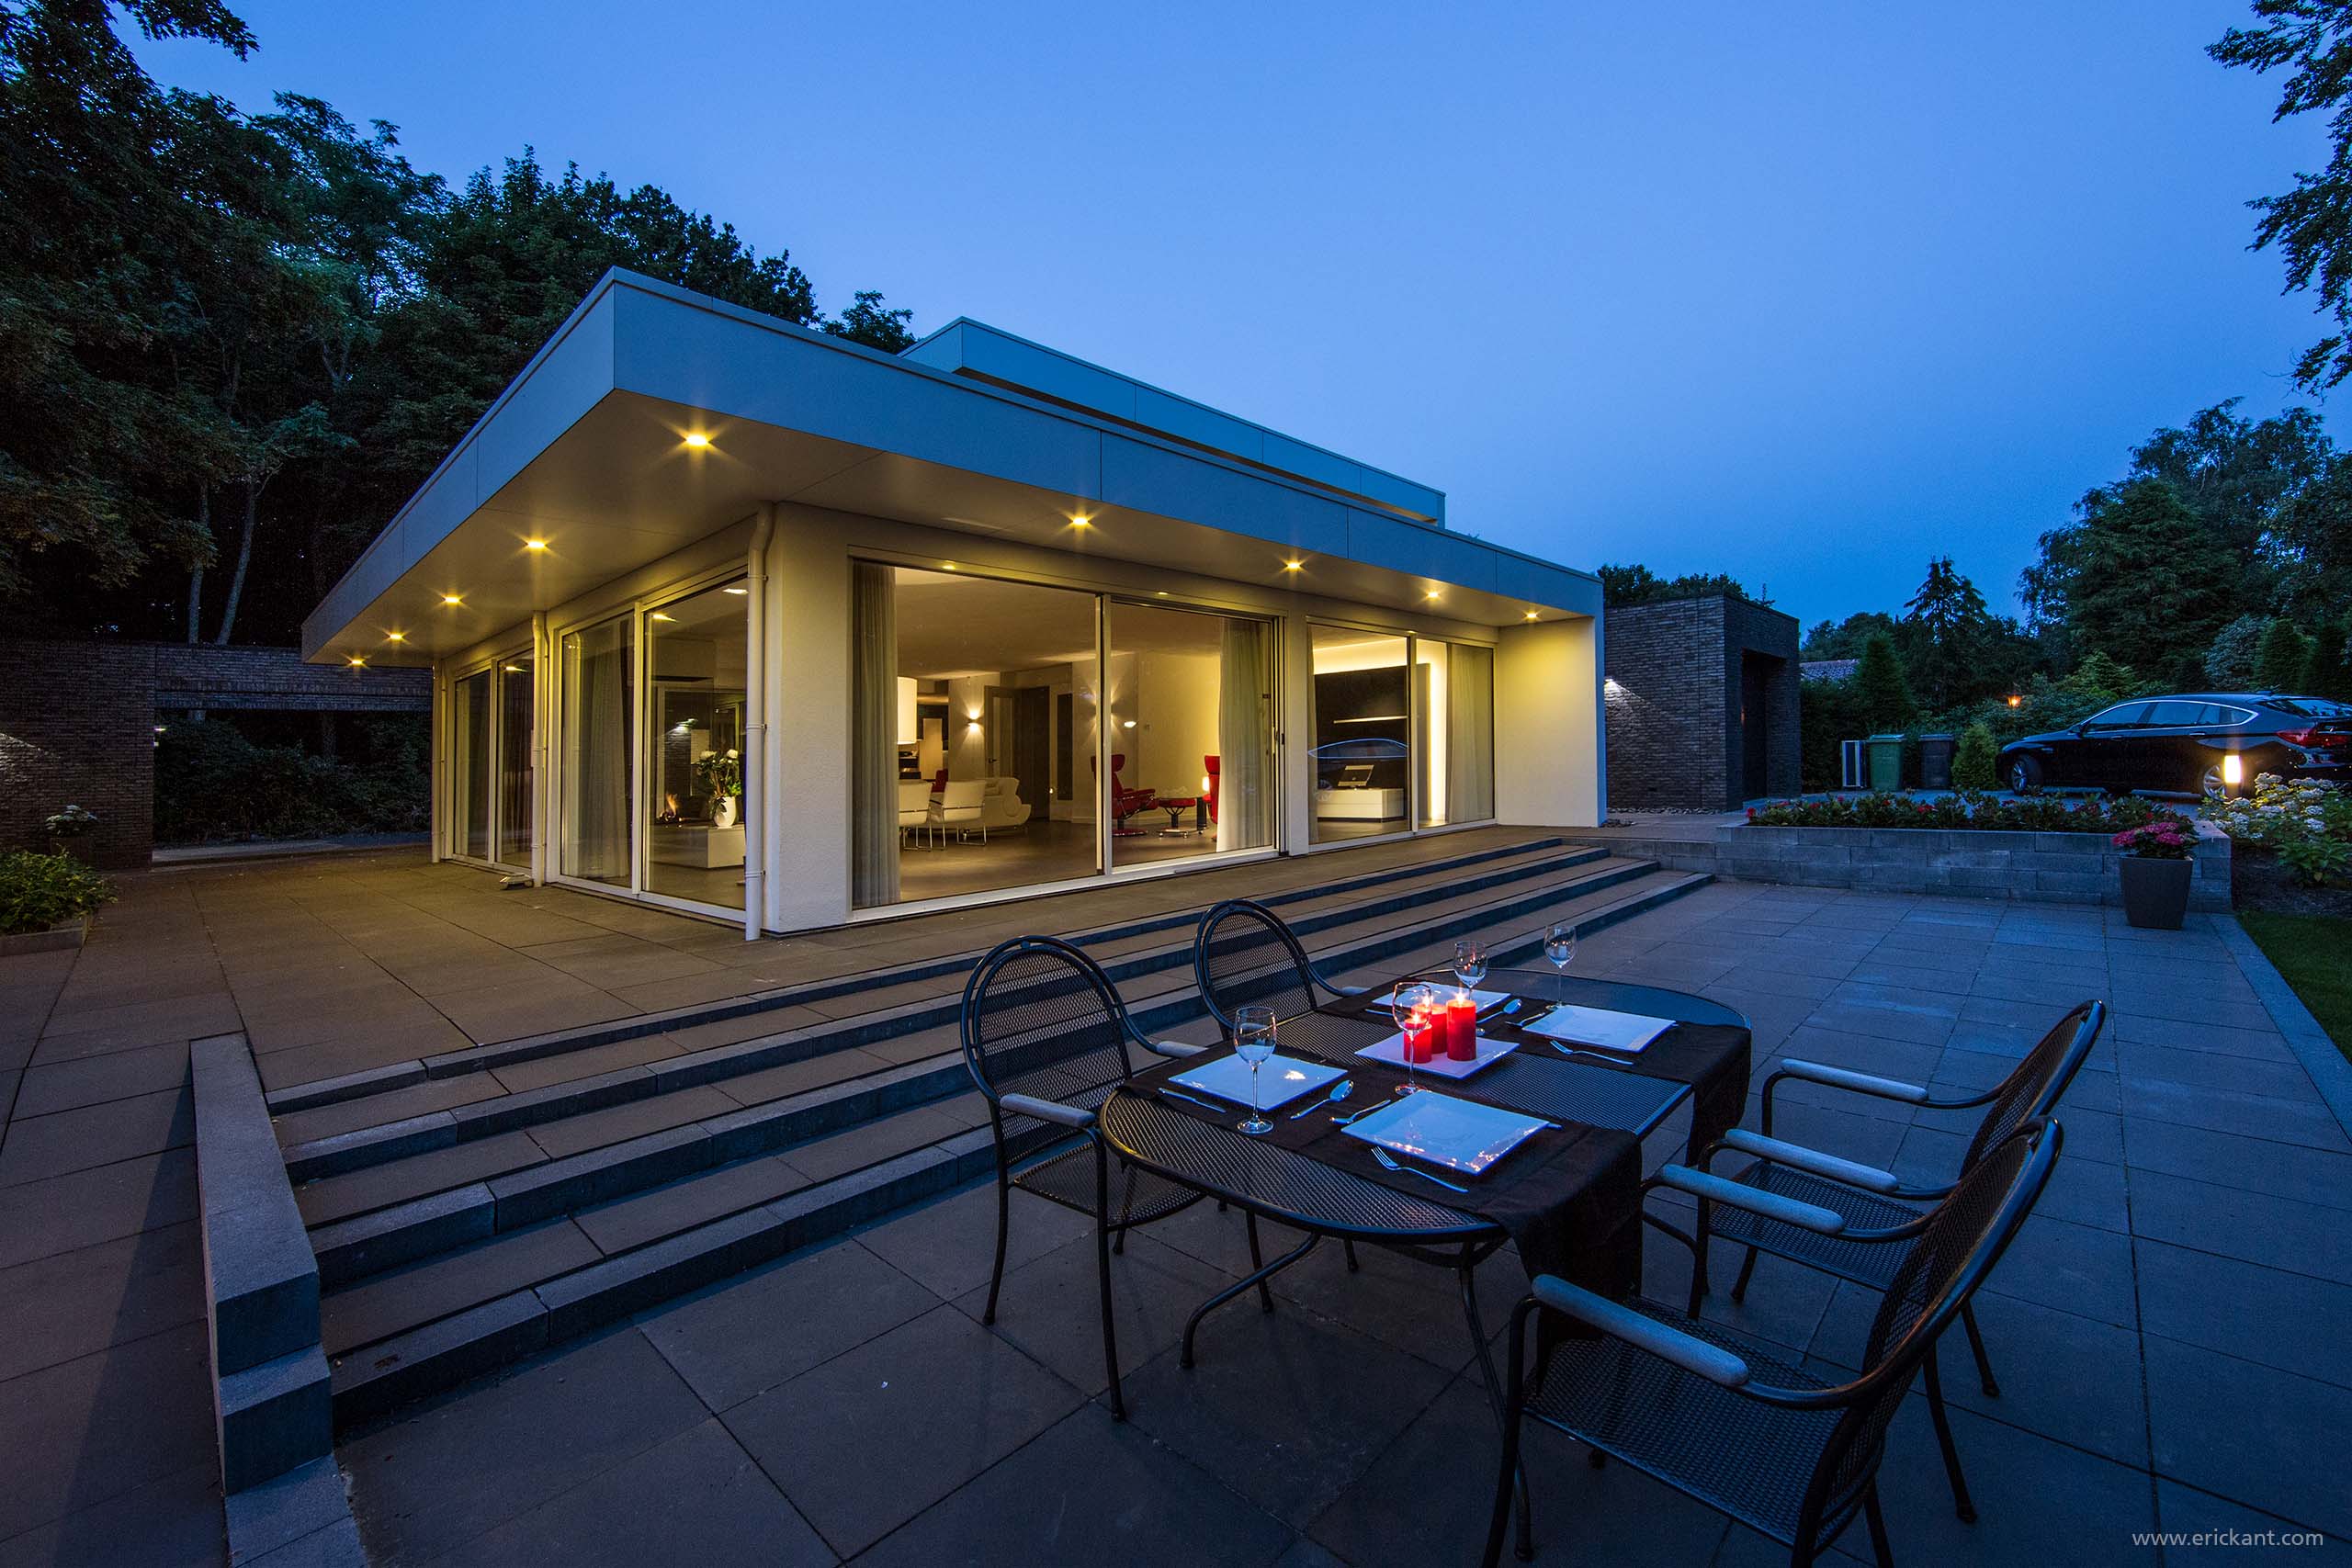 Villa minimalistic-exterior by night side-ERIC KANT.jpg